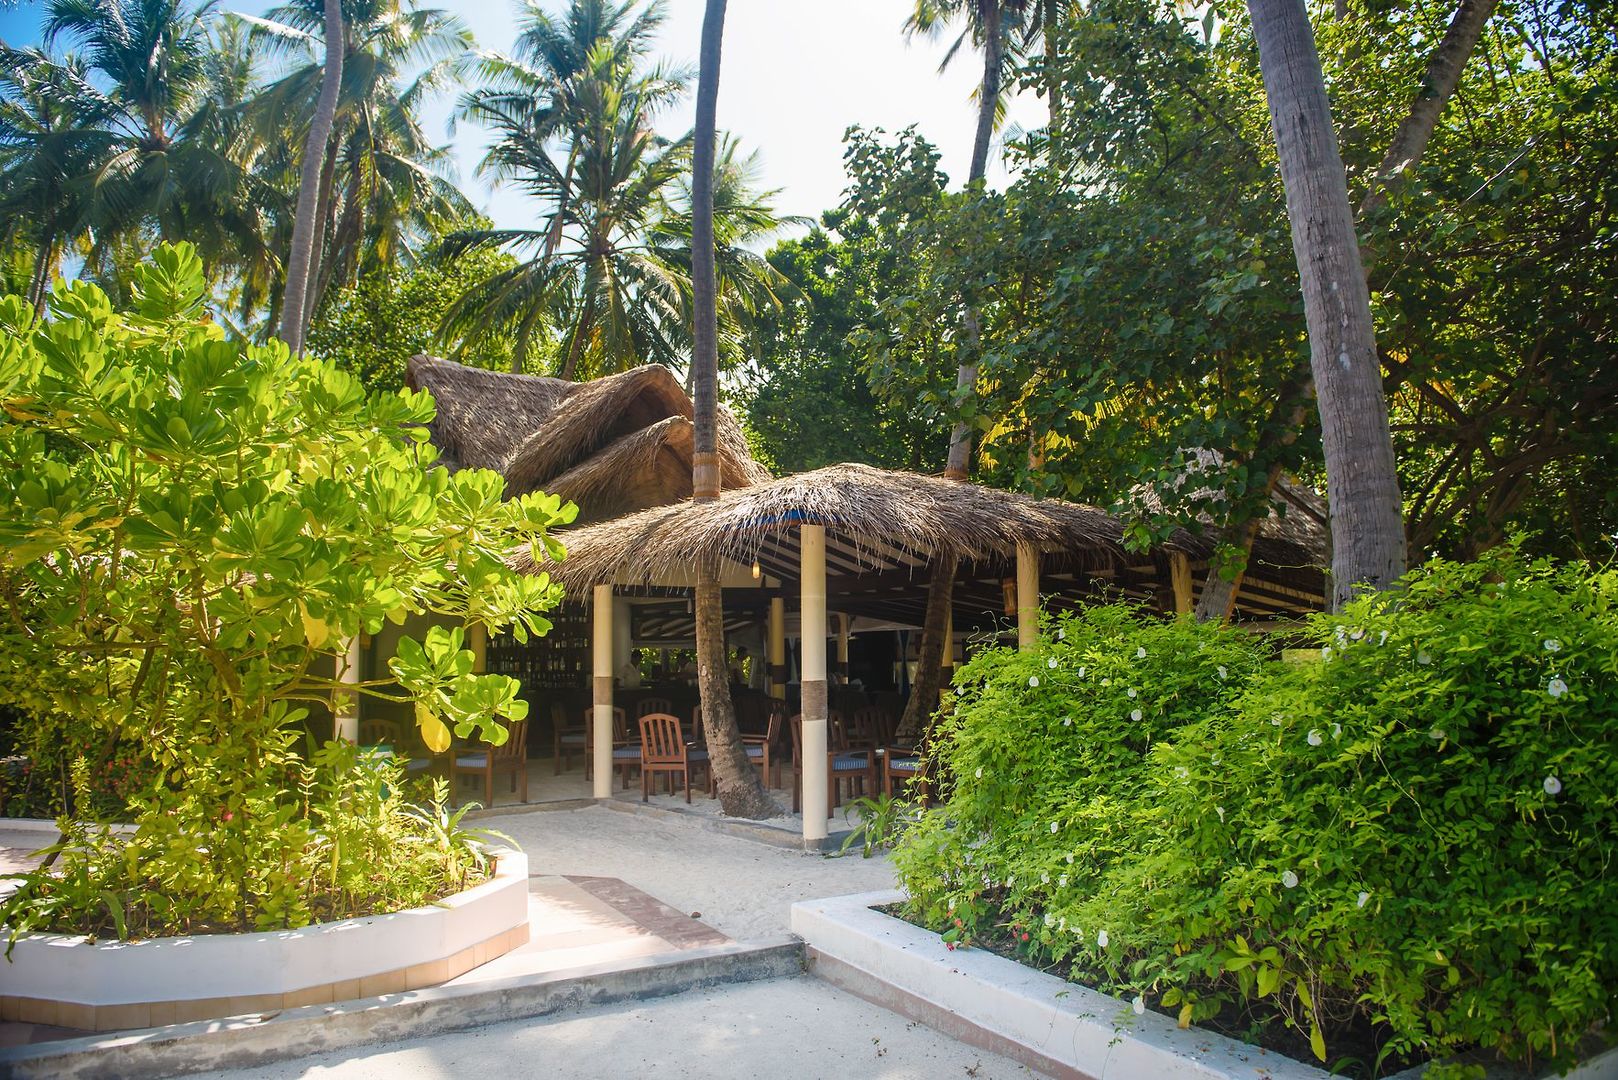 Biyadhoo Island Resort